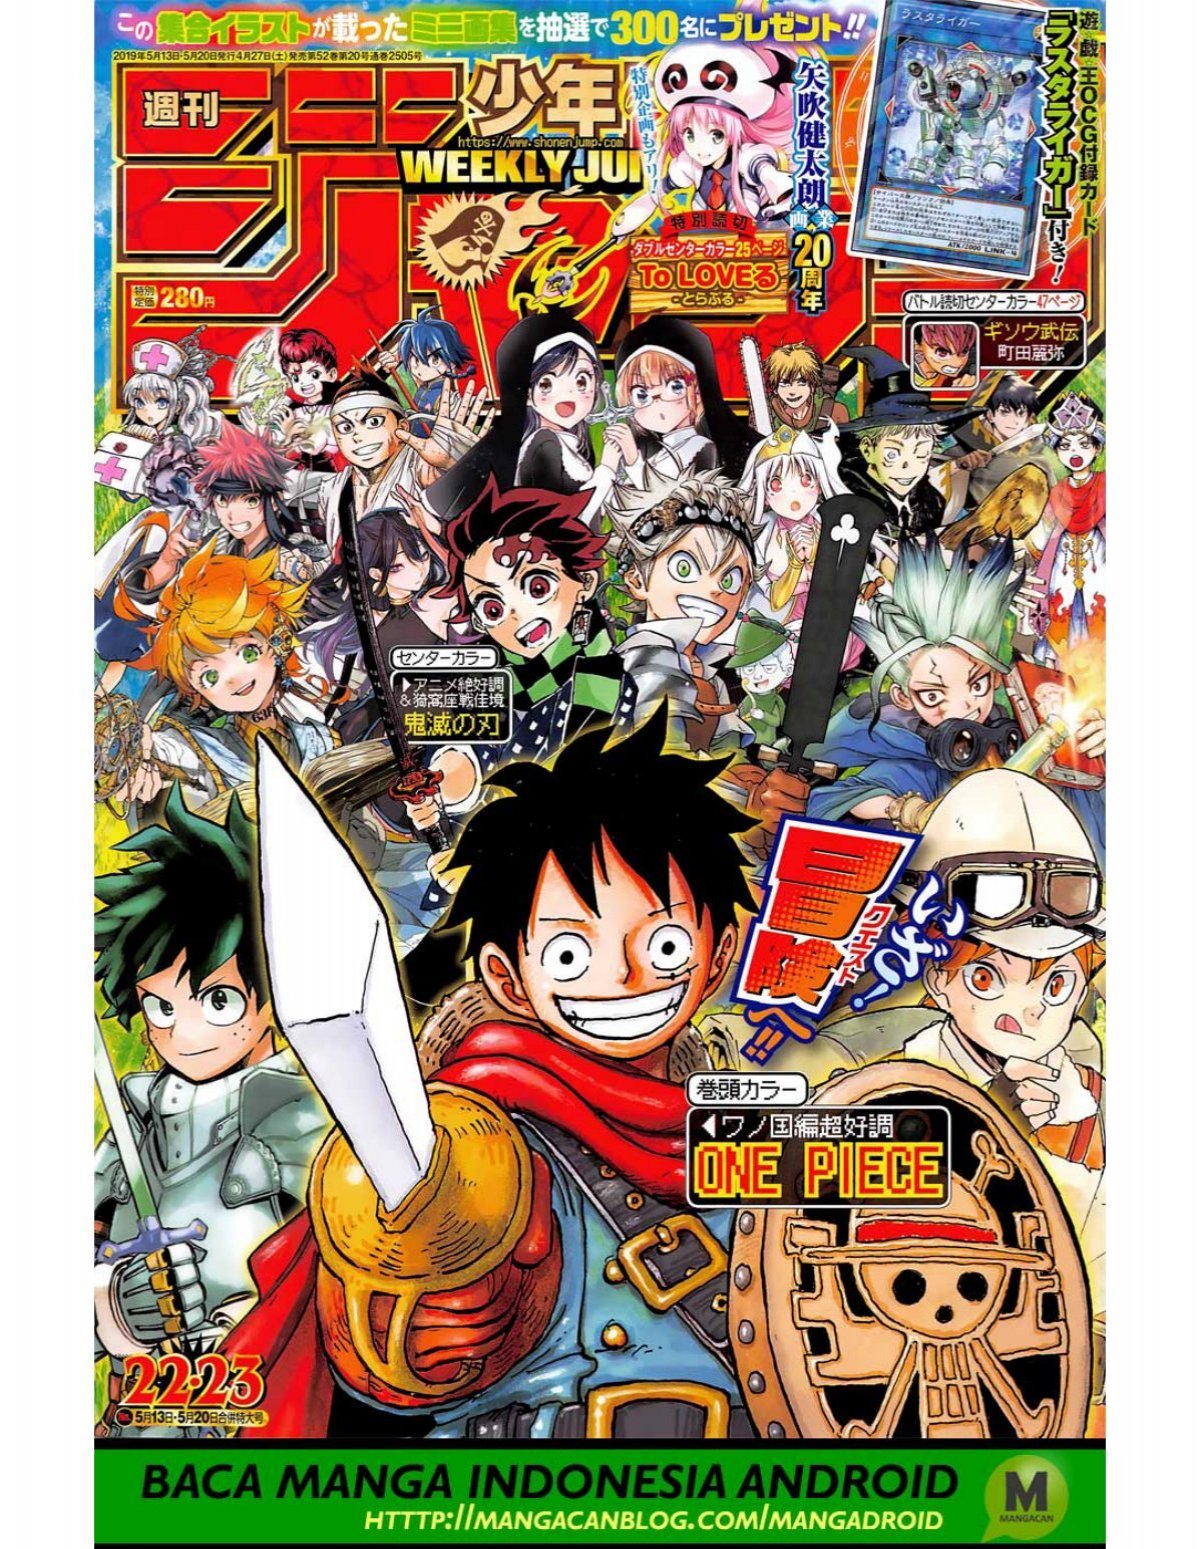 Samehadaku One Piece Manga